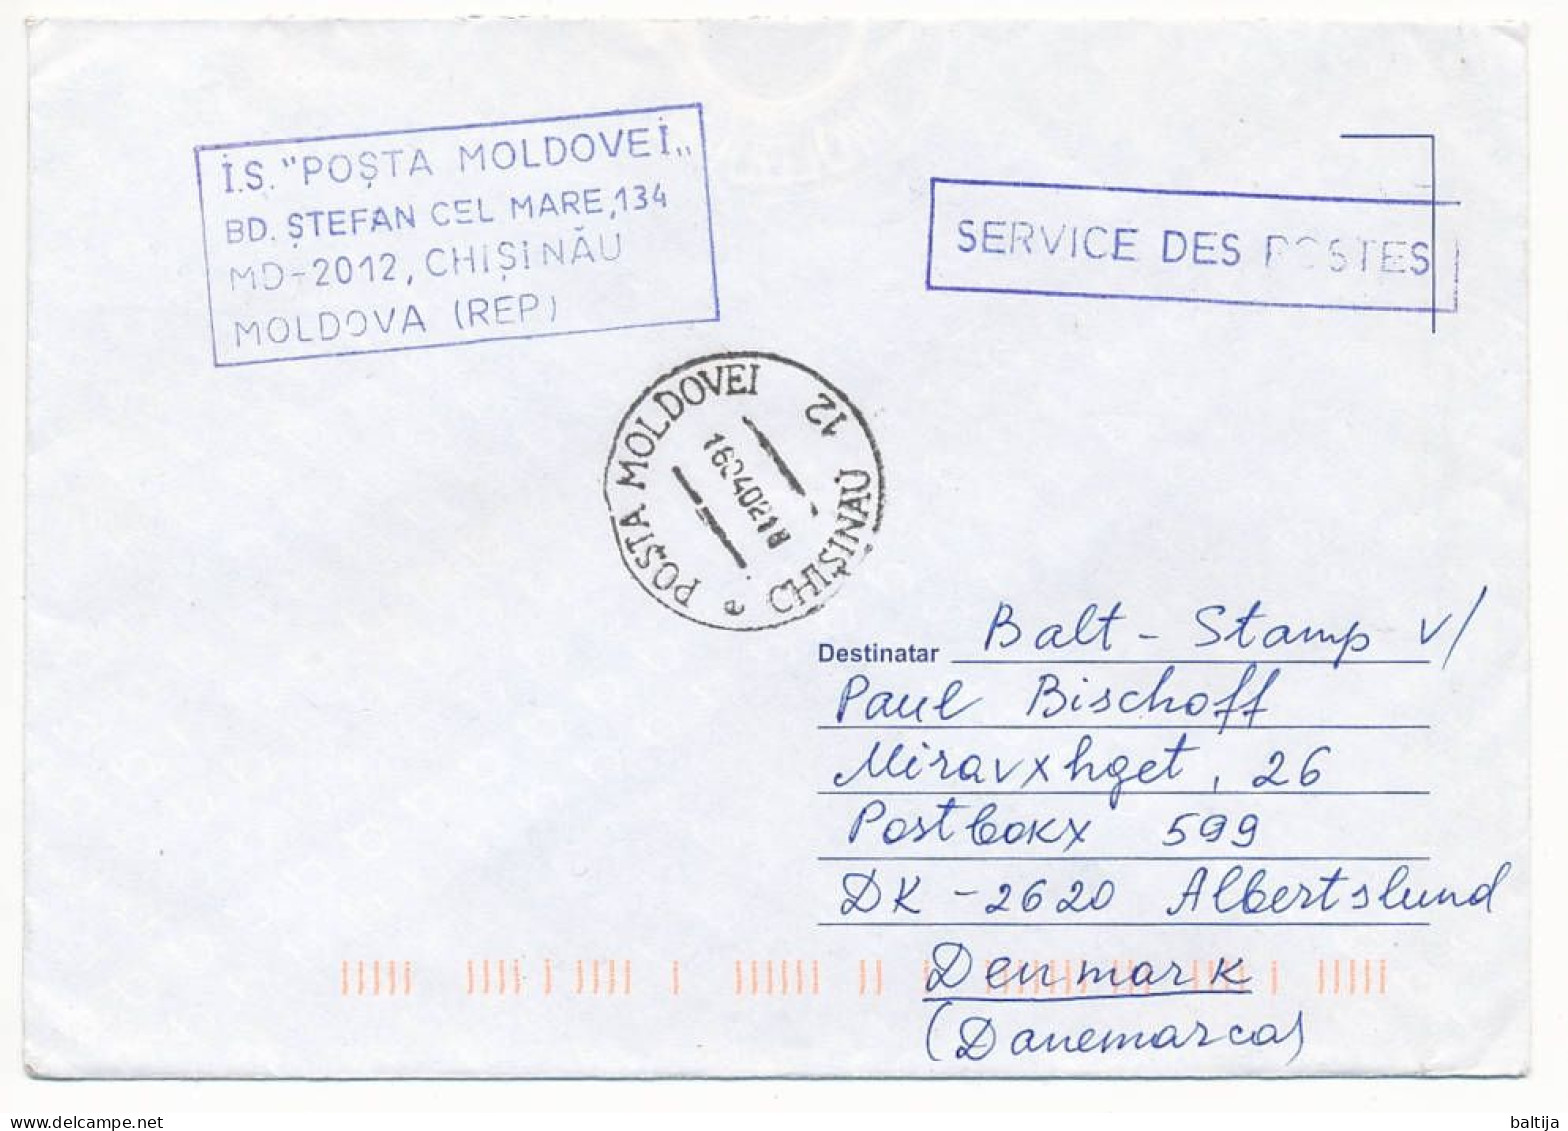 Moldova, Postal Service Cover Abroad / Service Des Postes - 16 April 2002 Chișinău 12 - Moldova